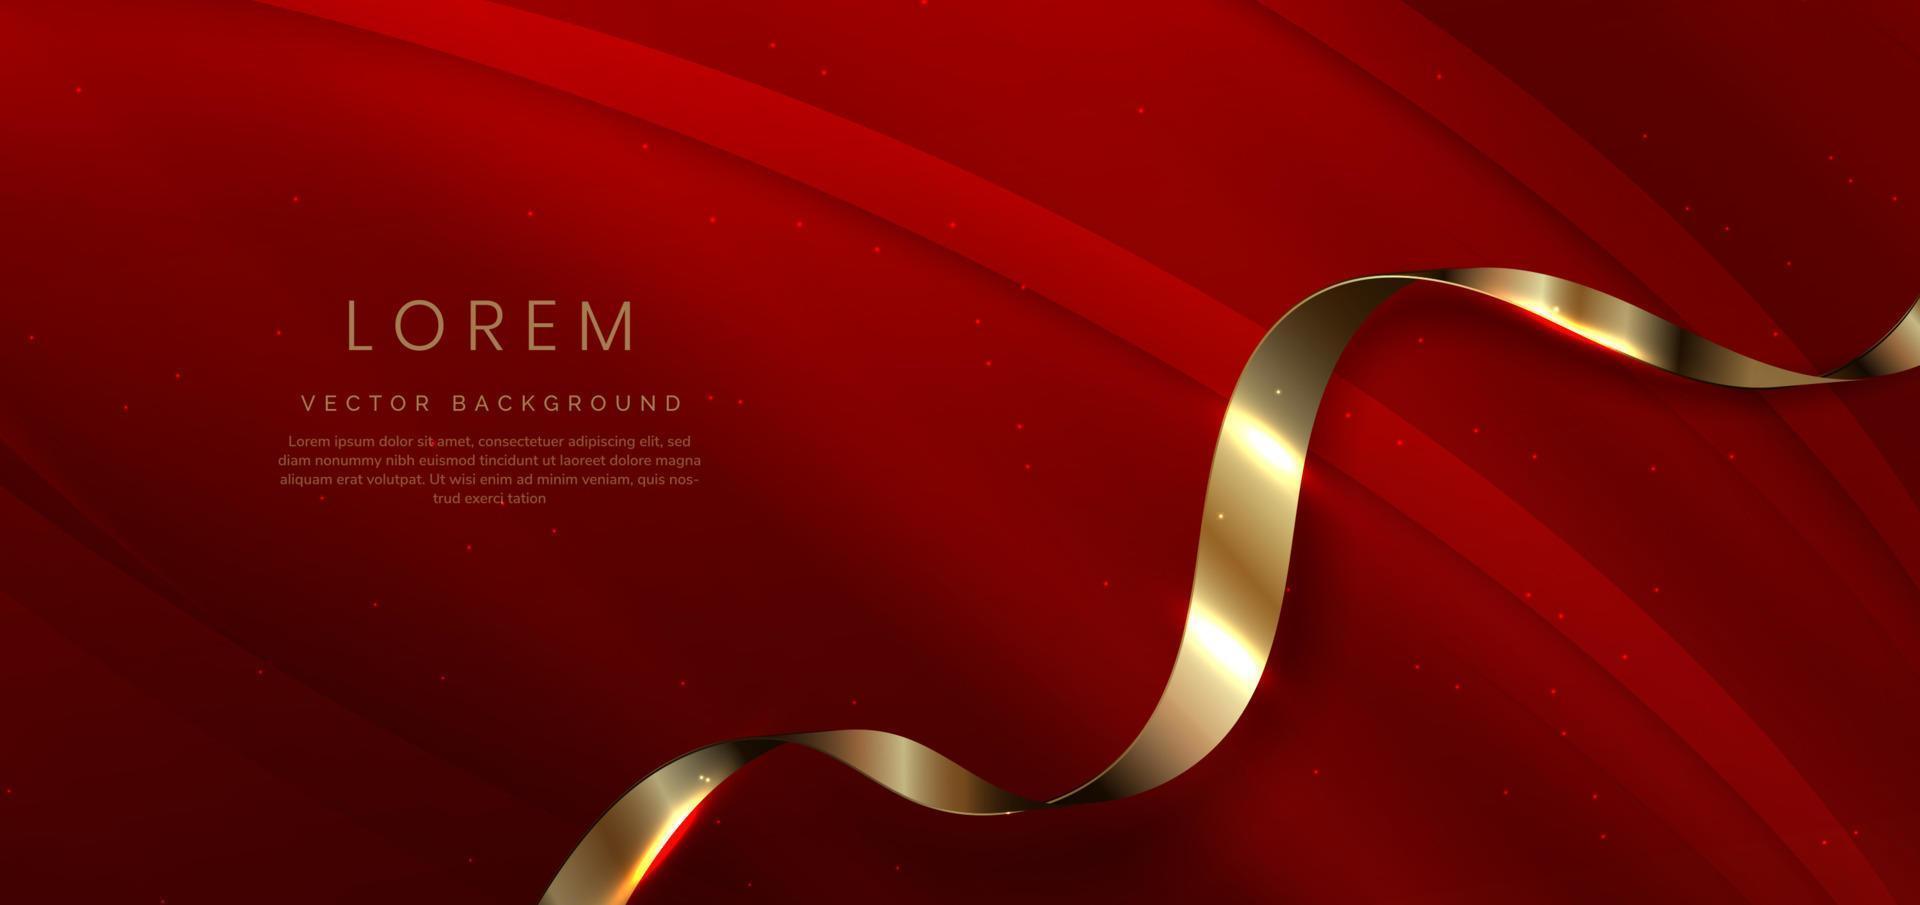 fondo rojo de plantilla 3d abstracto con líneas doradas curvas onduladas con espacio de copia para texto. estilo de lujo vector